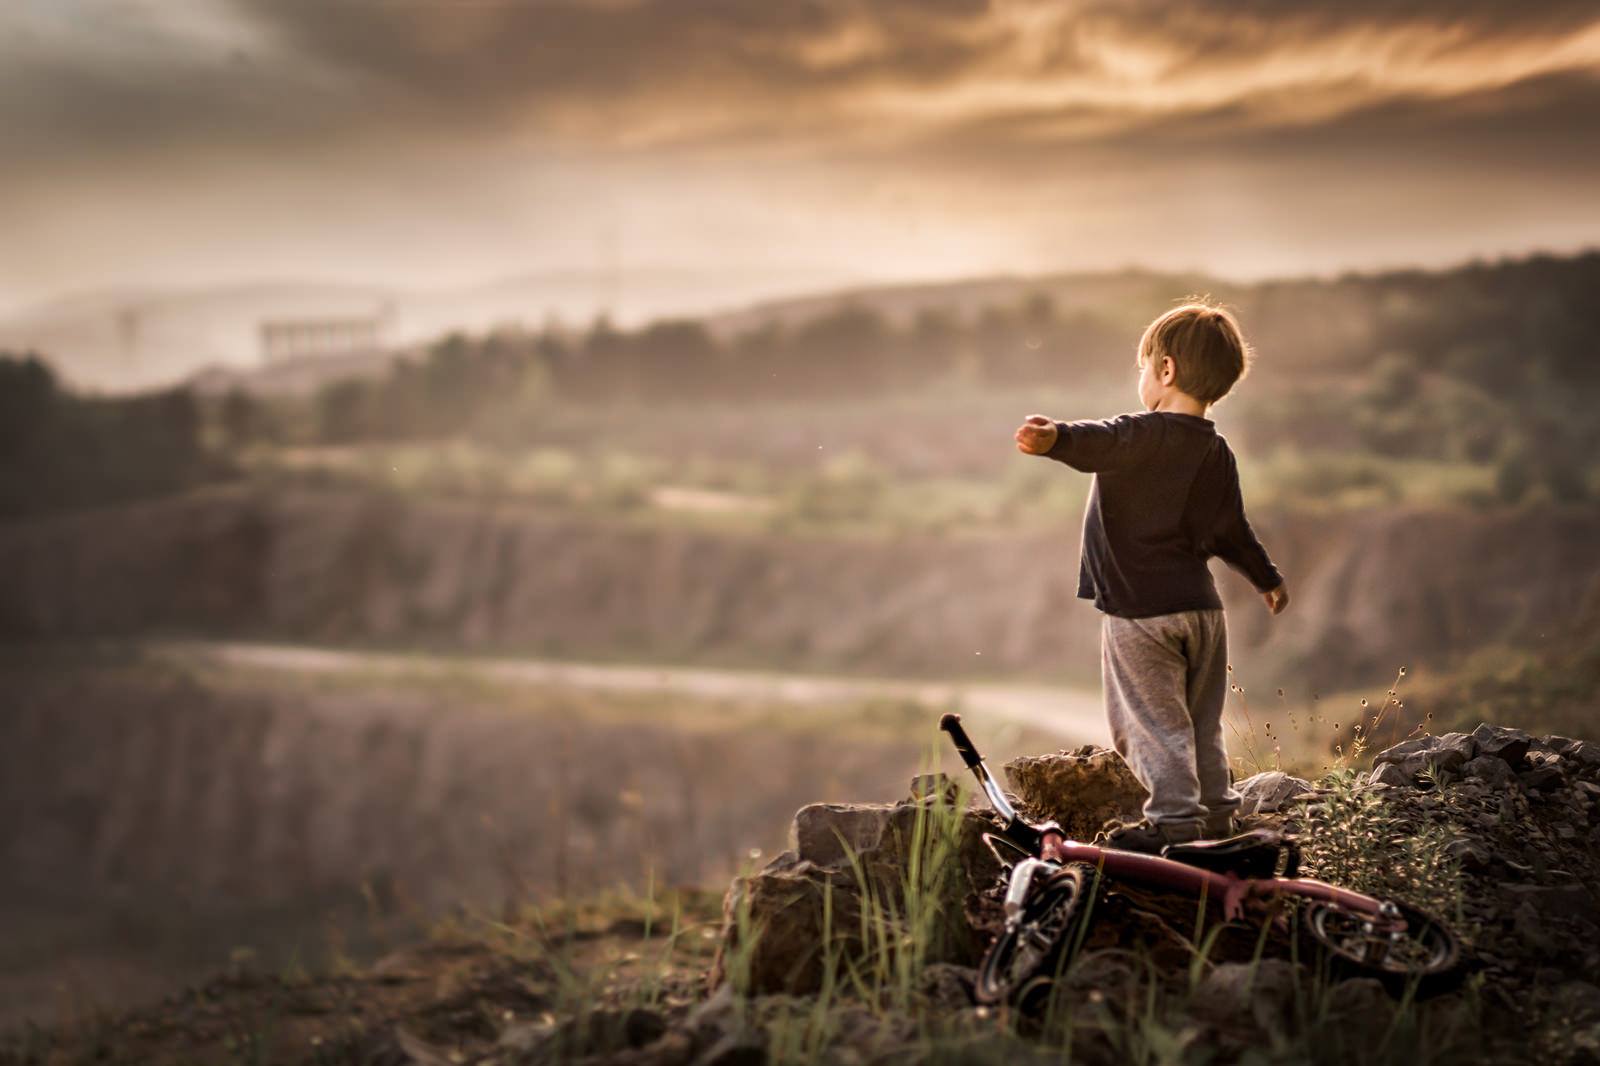 Фото Мальчик стоит на велосипеде на фоне огромного панорамного вида природы, ву igrudzien